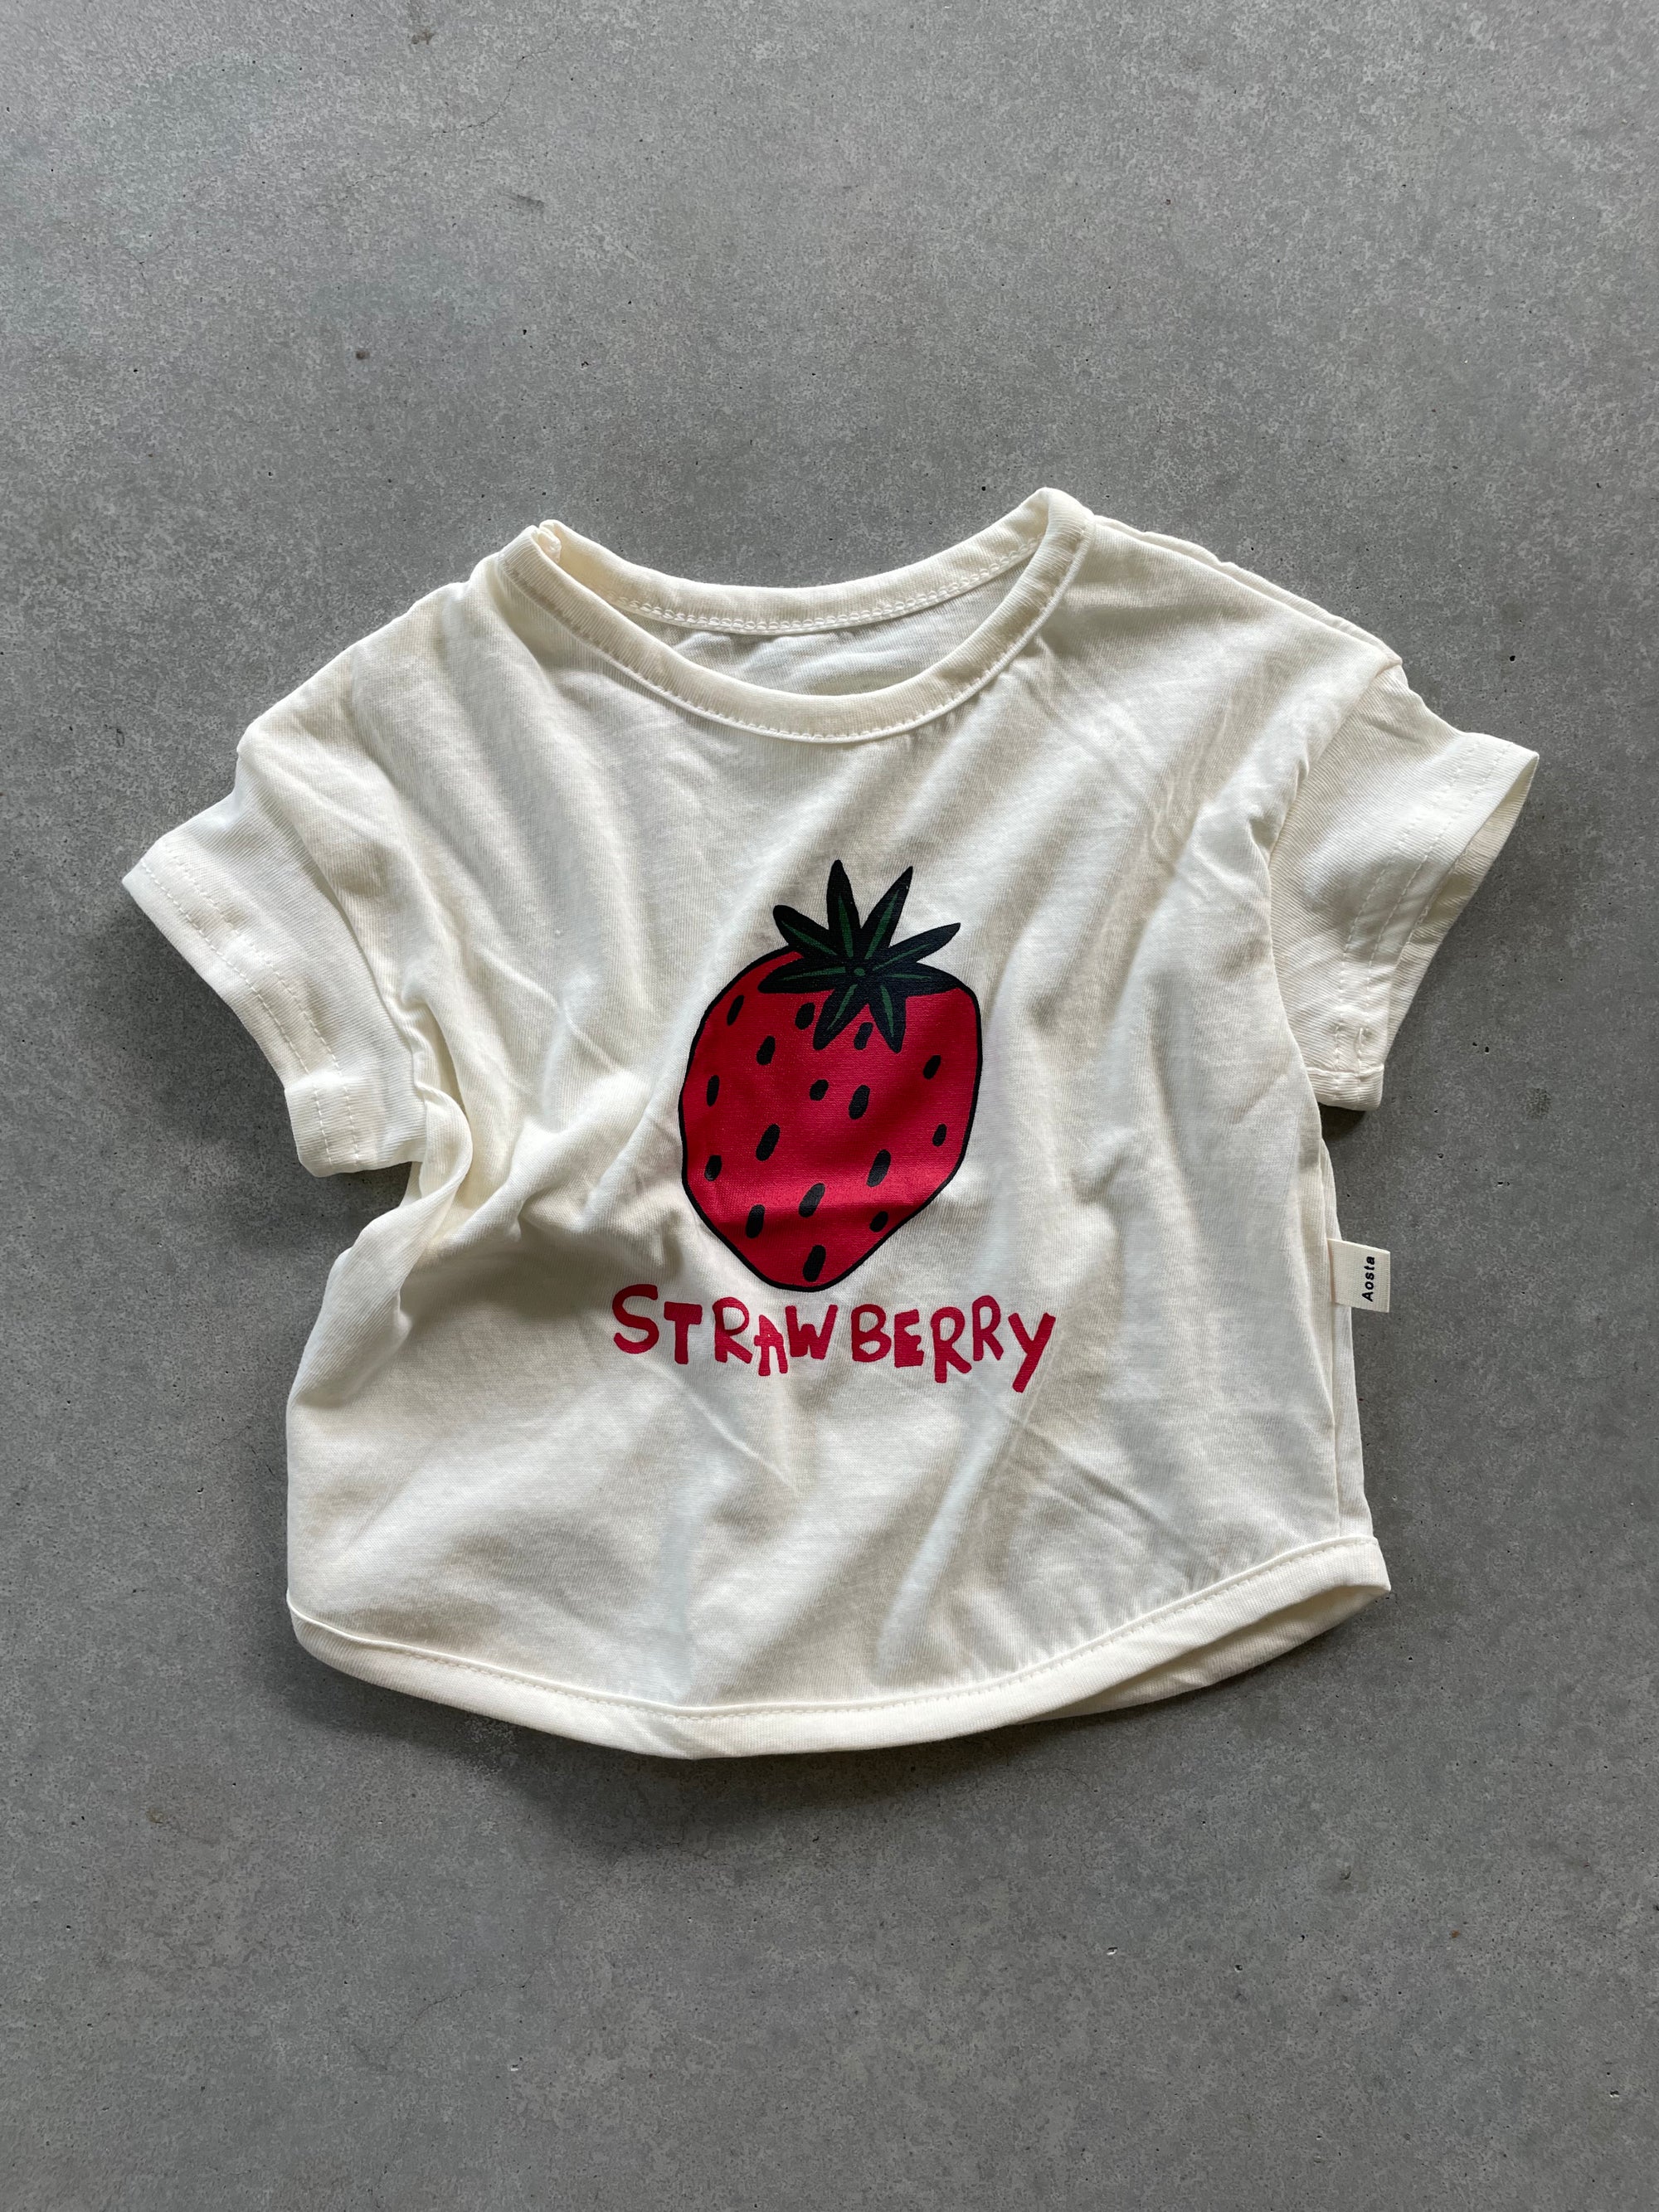 Strawberry tee